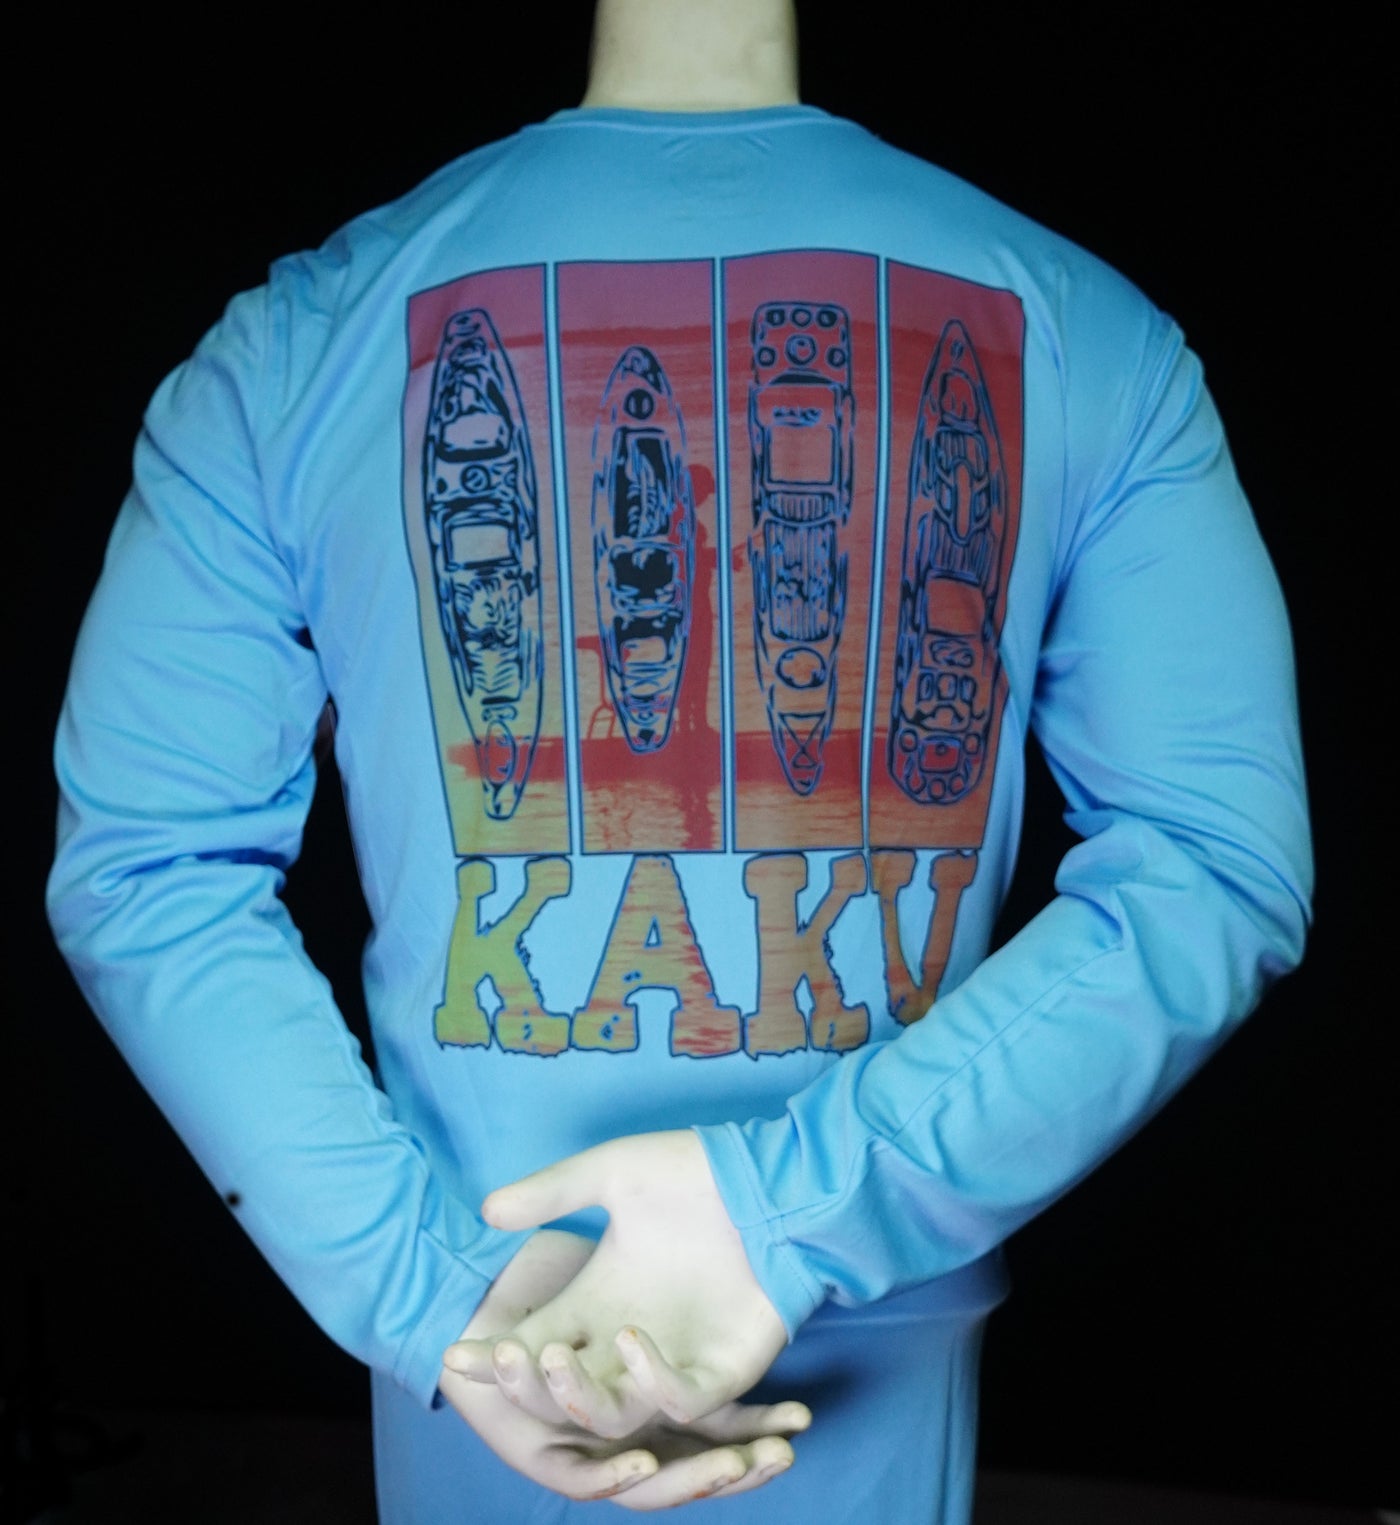 NEW LS Kaku Vintage Performance Shirts